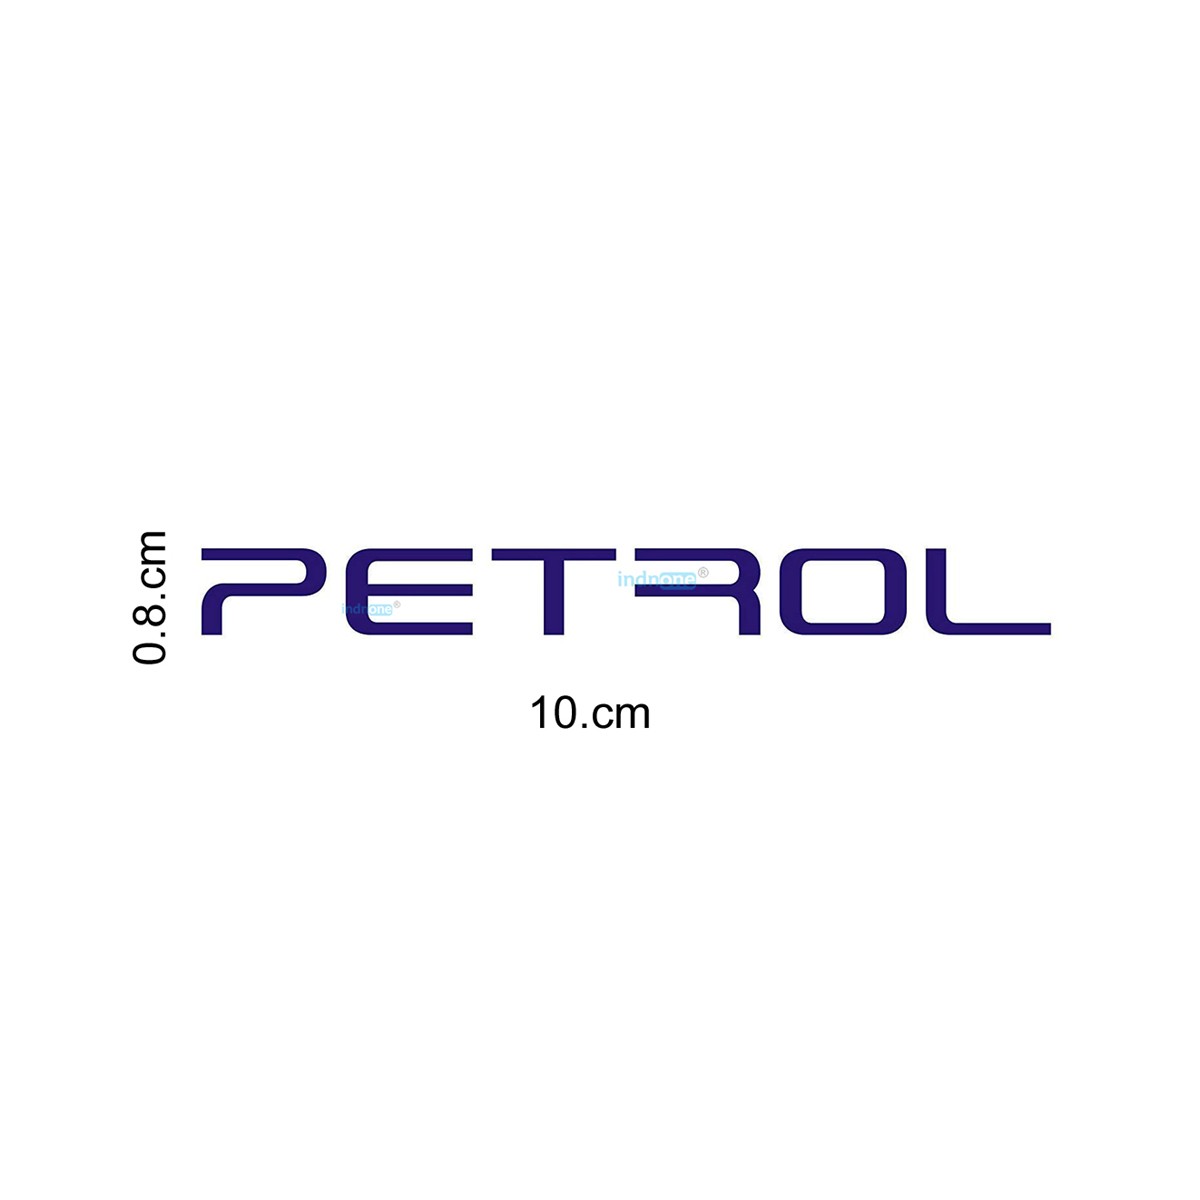 indnone® Petrol Logo Sticker for Car Waterproof PVC Vinyl Decal Sticker | Blue Color Standard Size